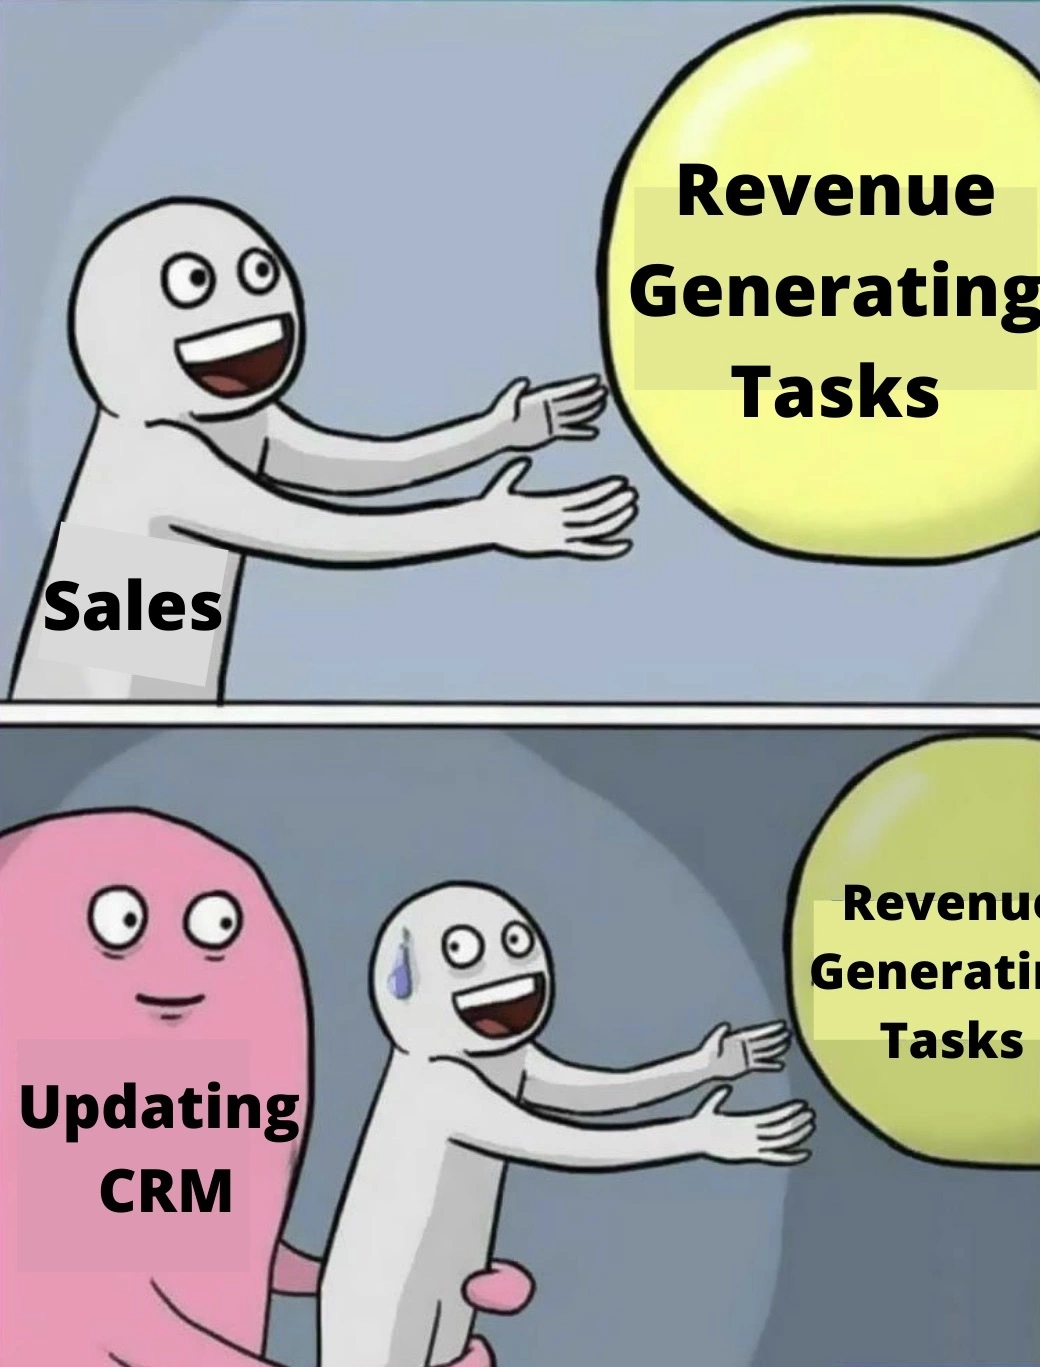 Revenue generating tasks vs updating CRM